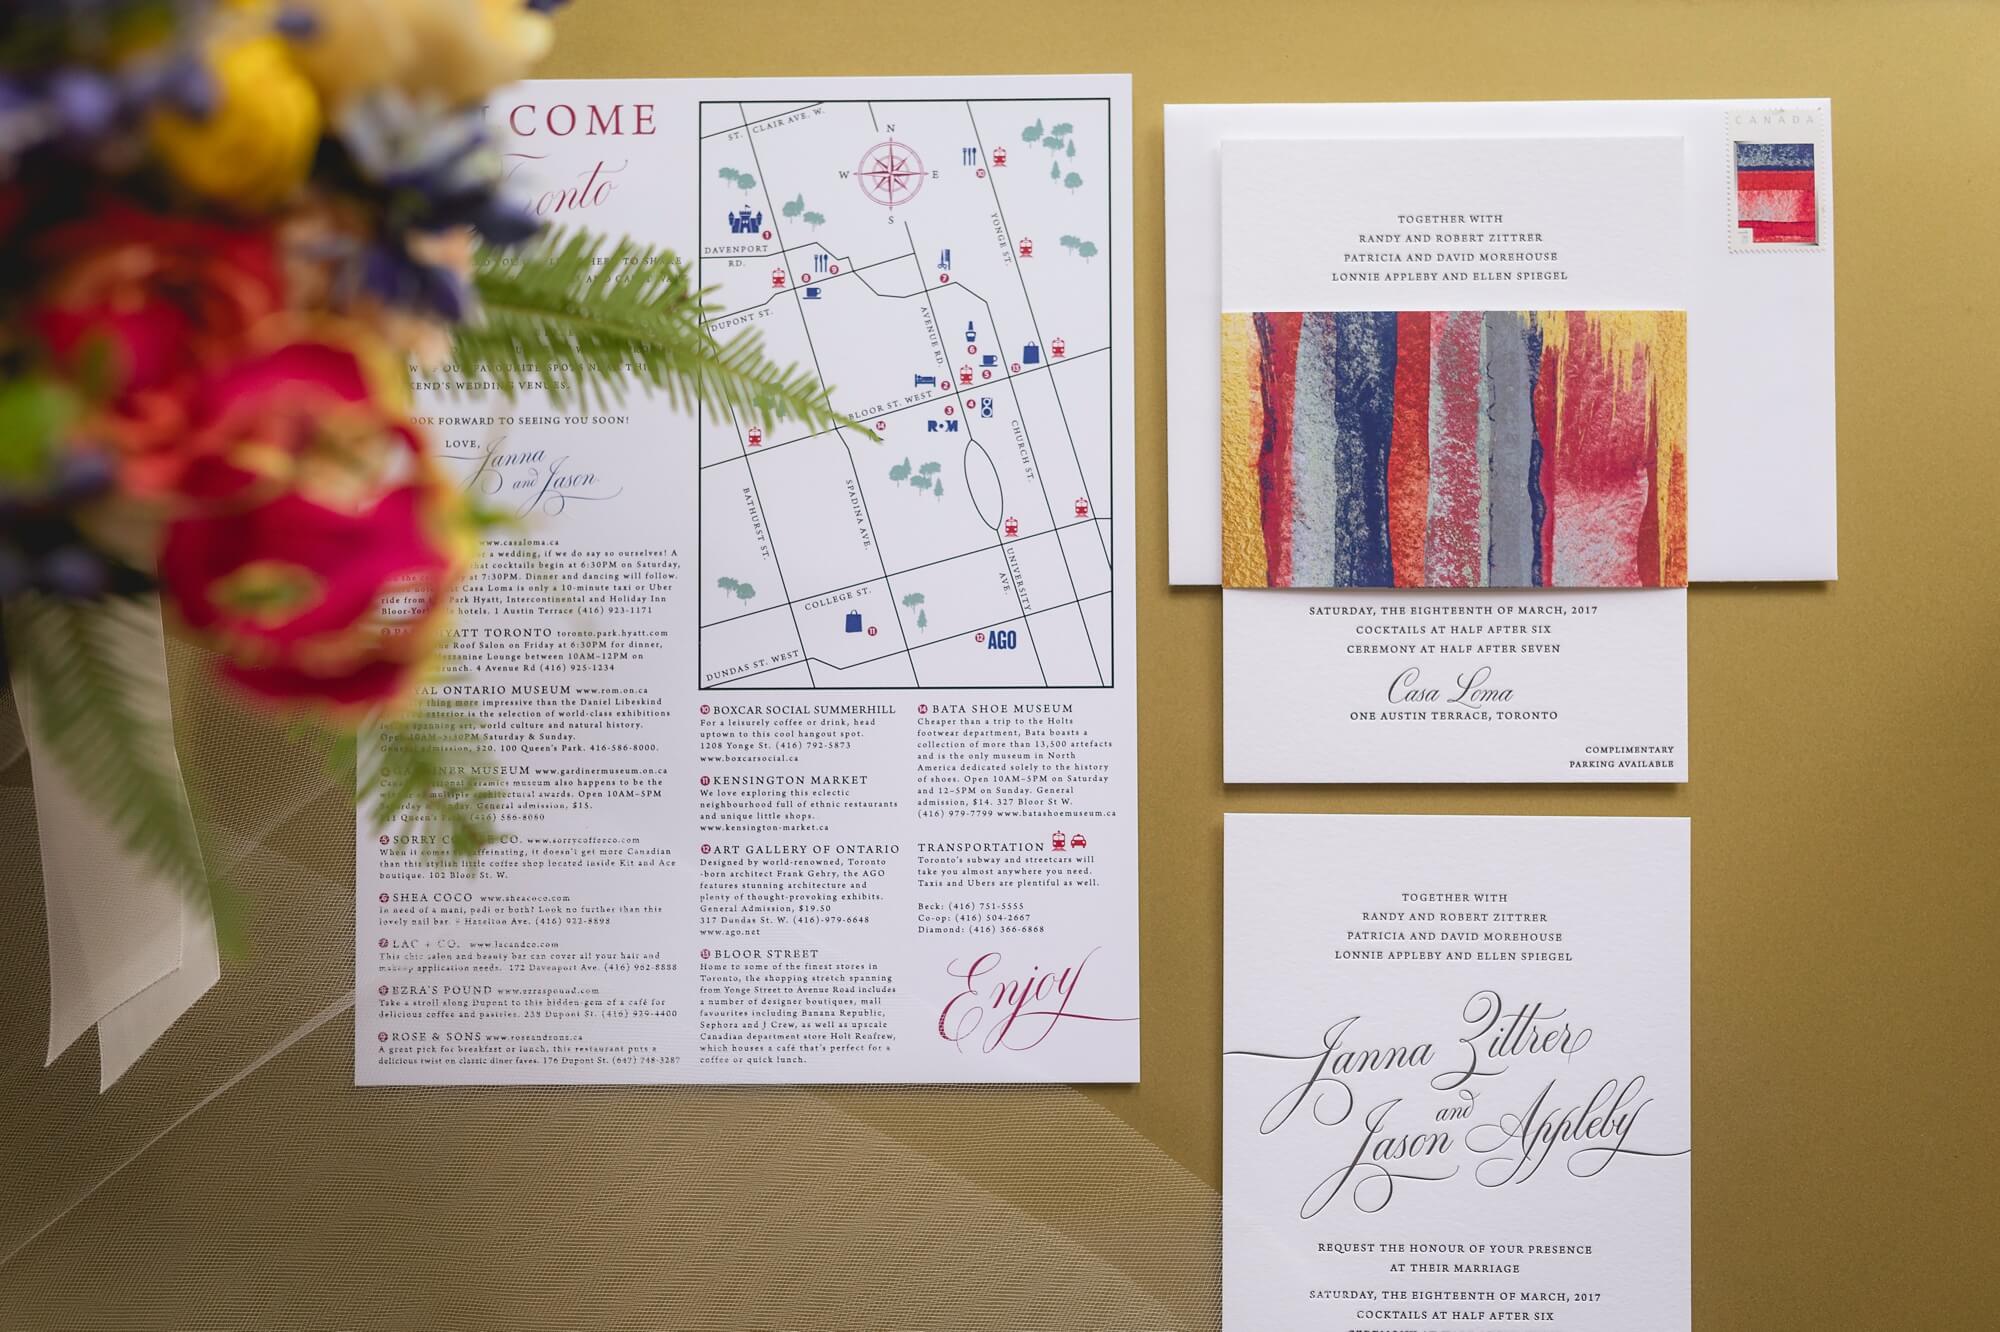 Detailed shots of wedding invitations in Toronto at Casa Loma